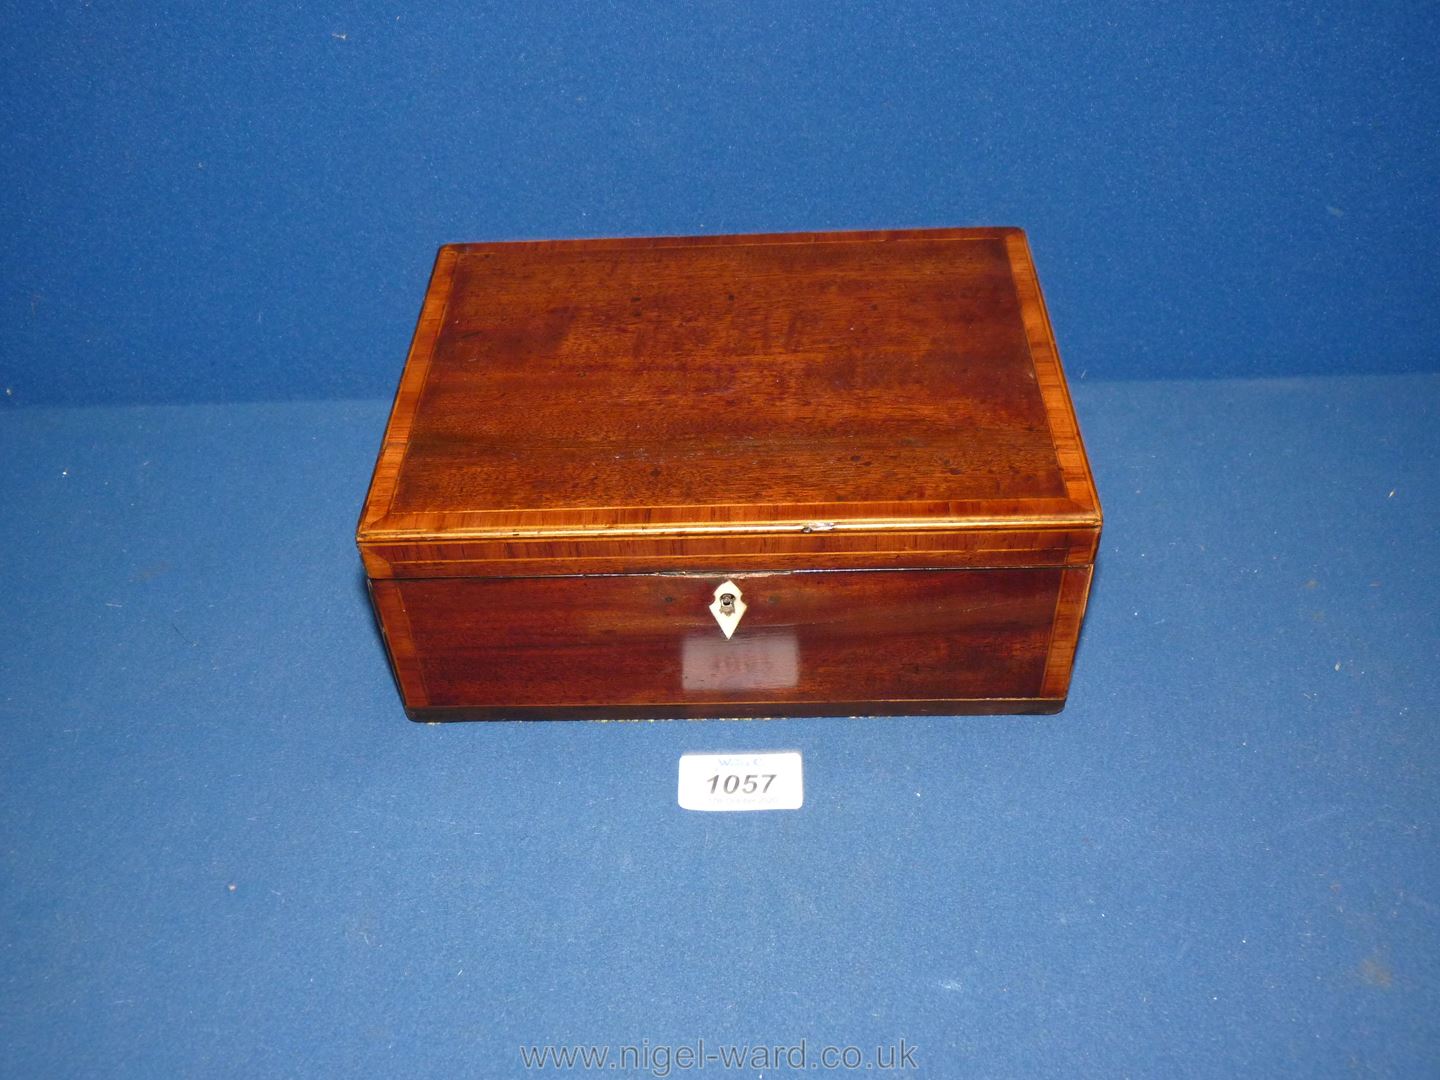 A Mahogany inlaid jewellery Box c. 1910, key present, 8 1/4" long x 6" wide x 3" deep.